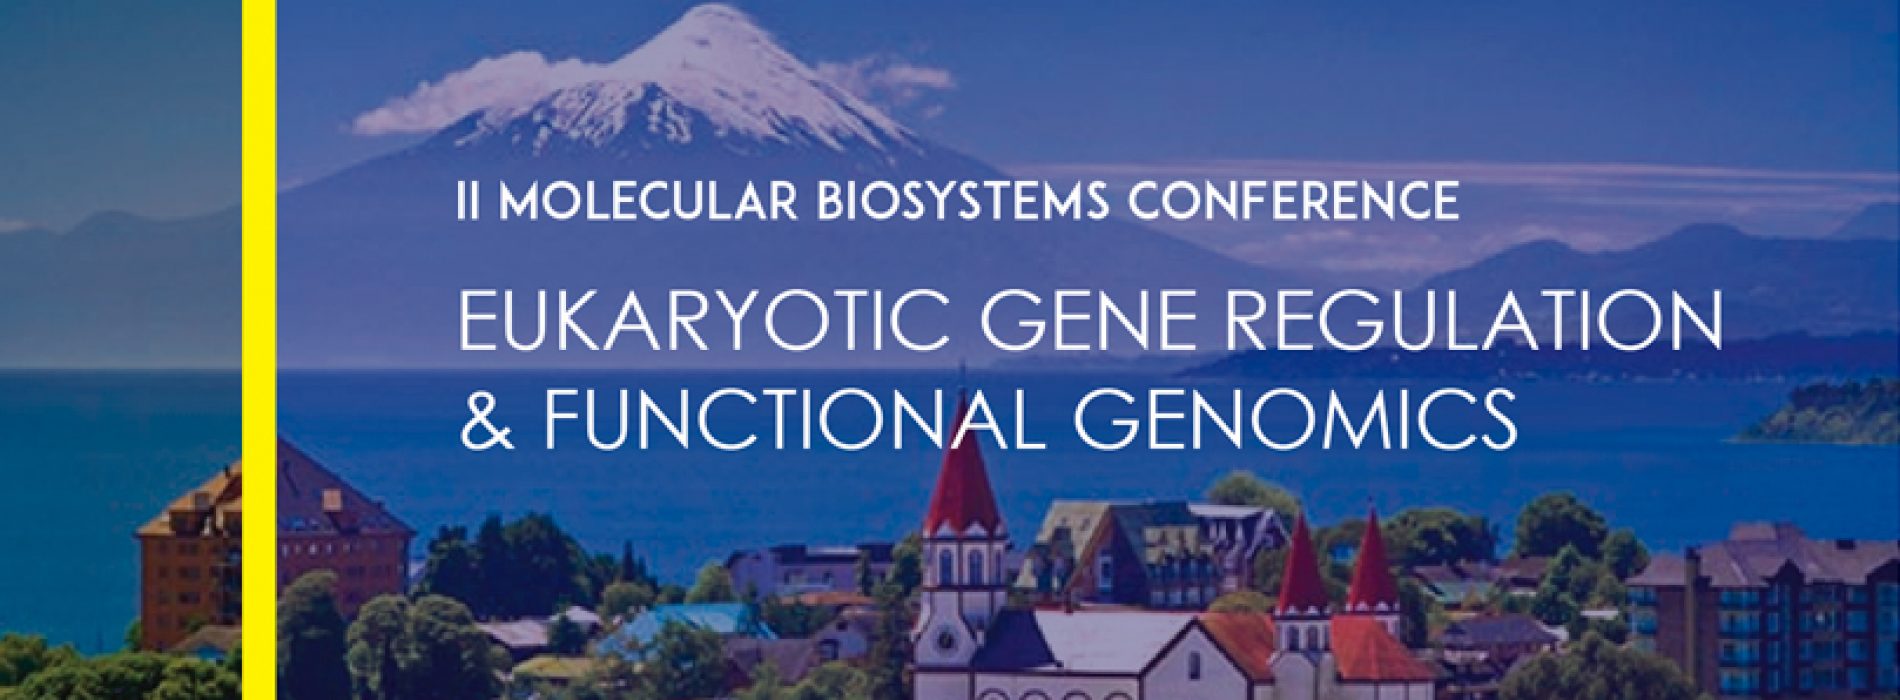 II Molecular Biosystems Conference Eukaryotic Gene Regulation and Functional Genomics